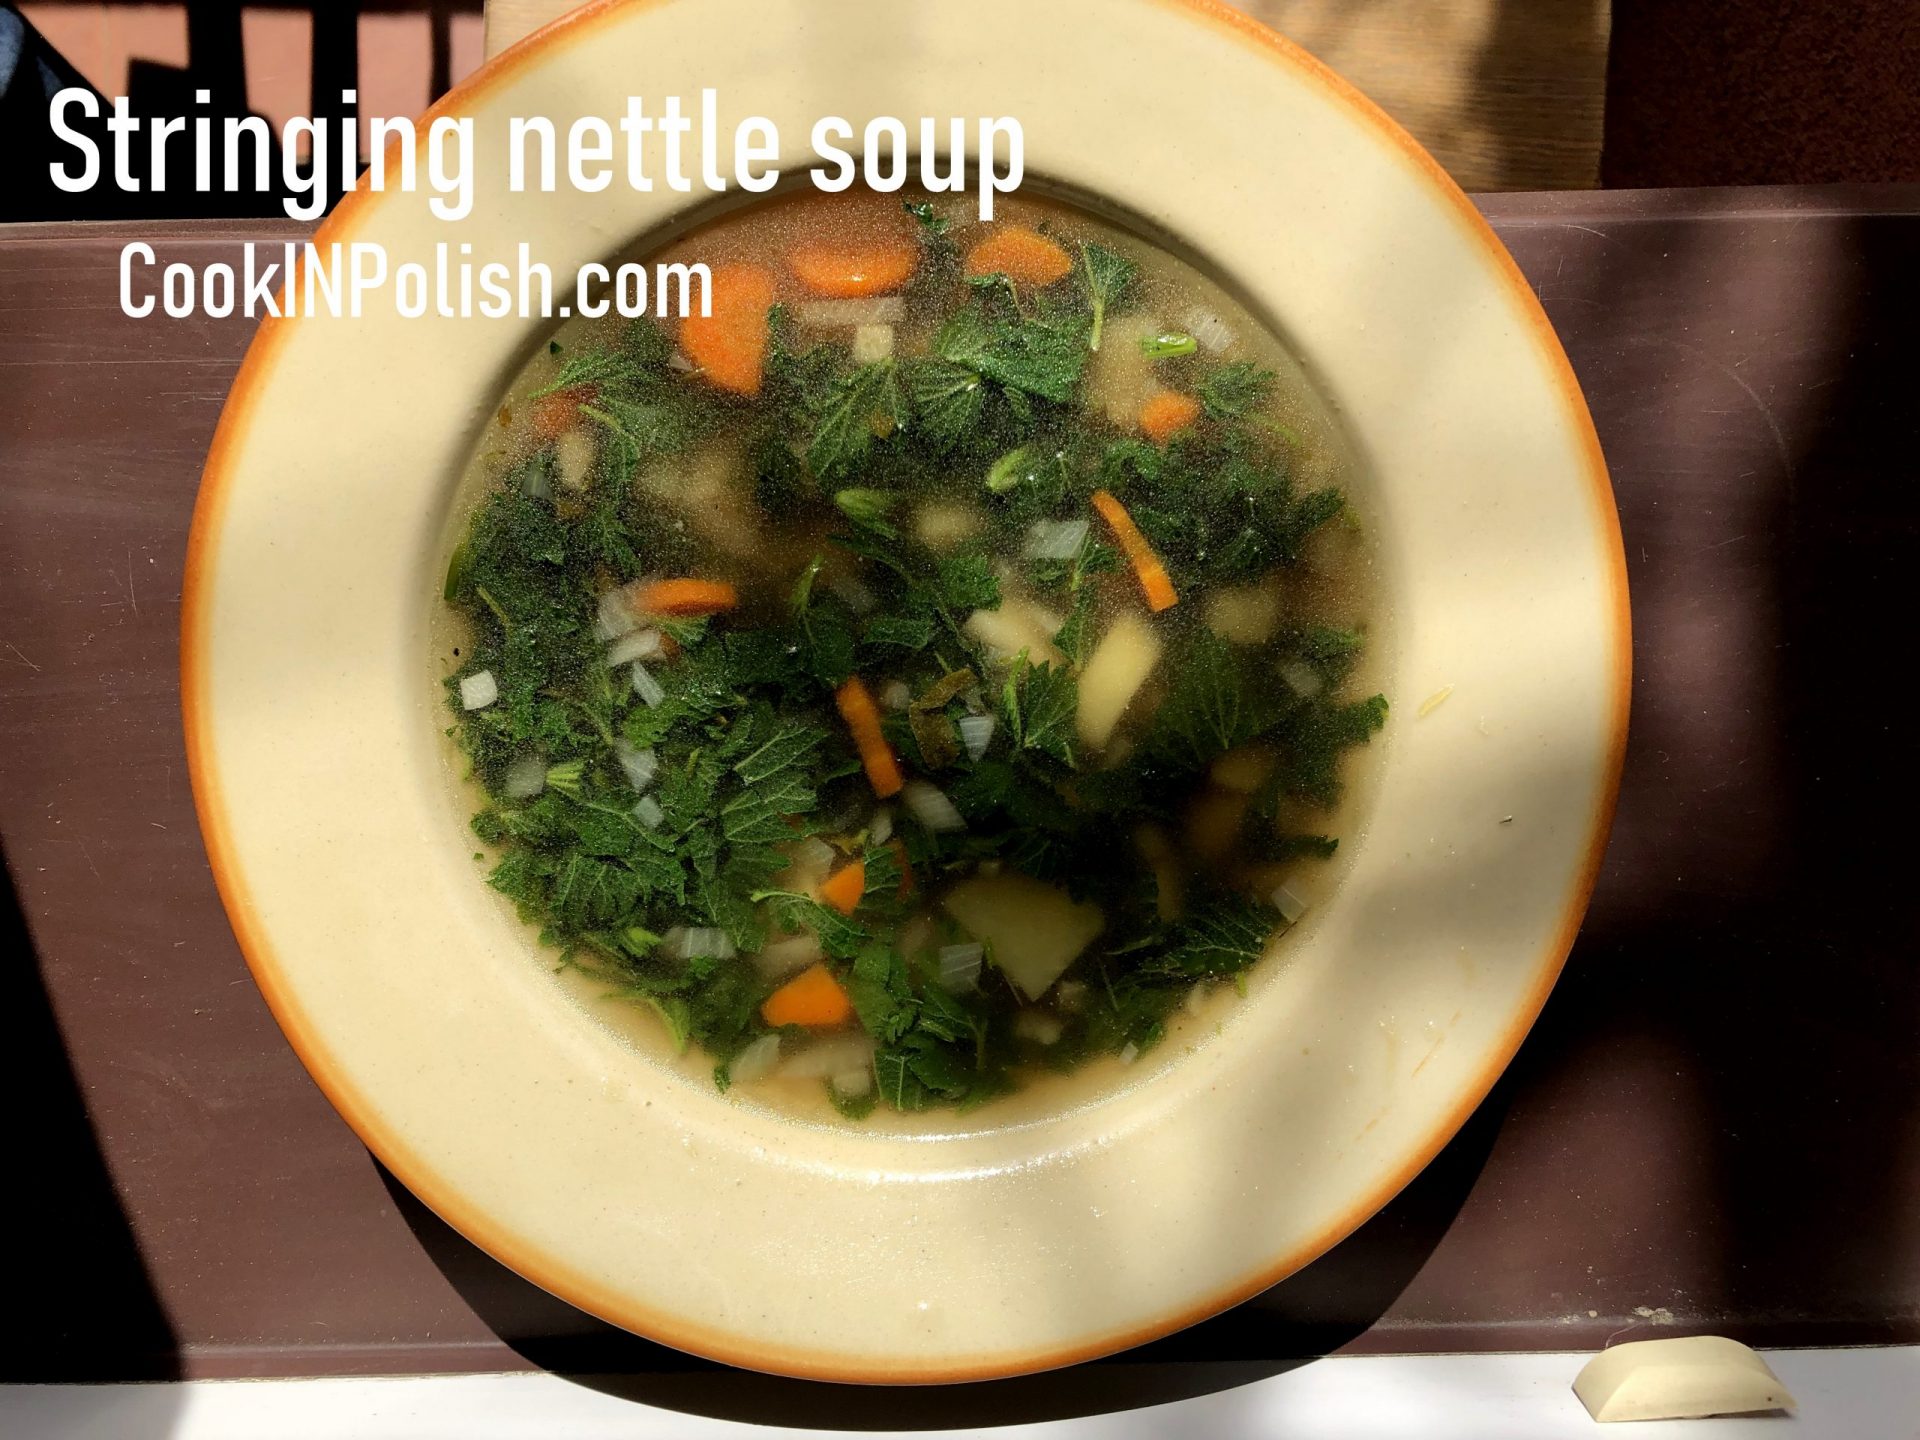 Pokrzywianka – Stinging Nettle Soup